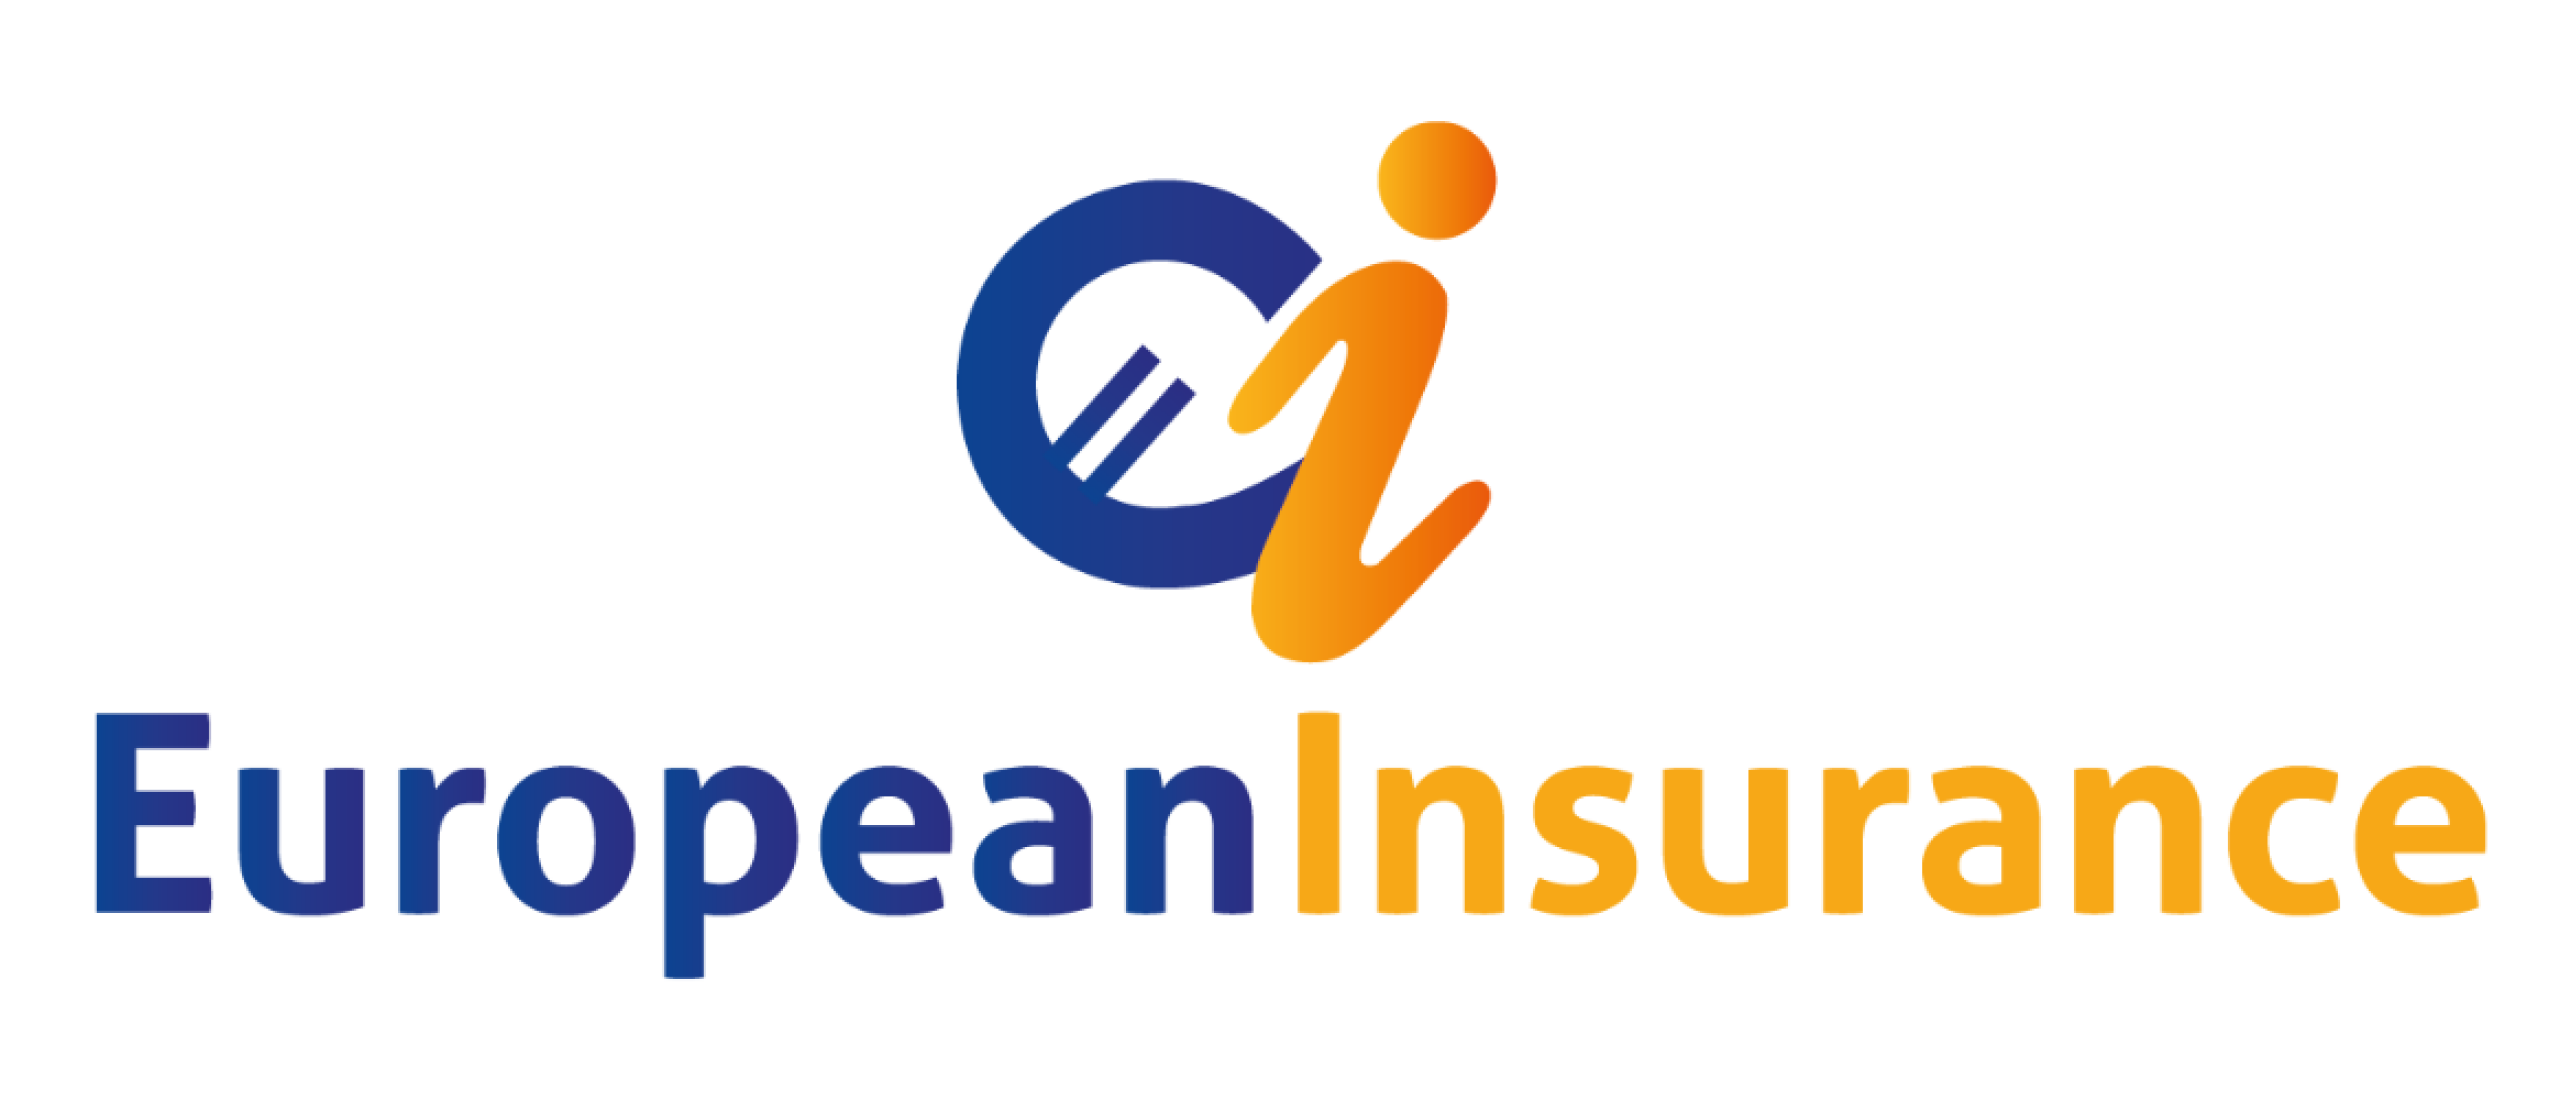 European Insurance logo